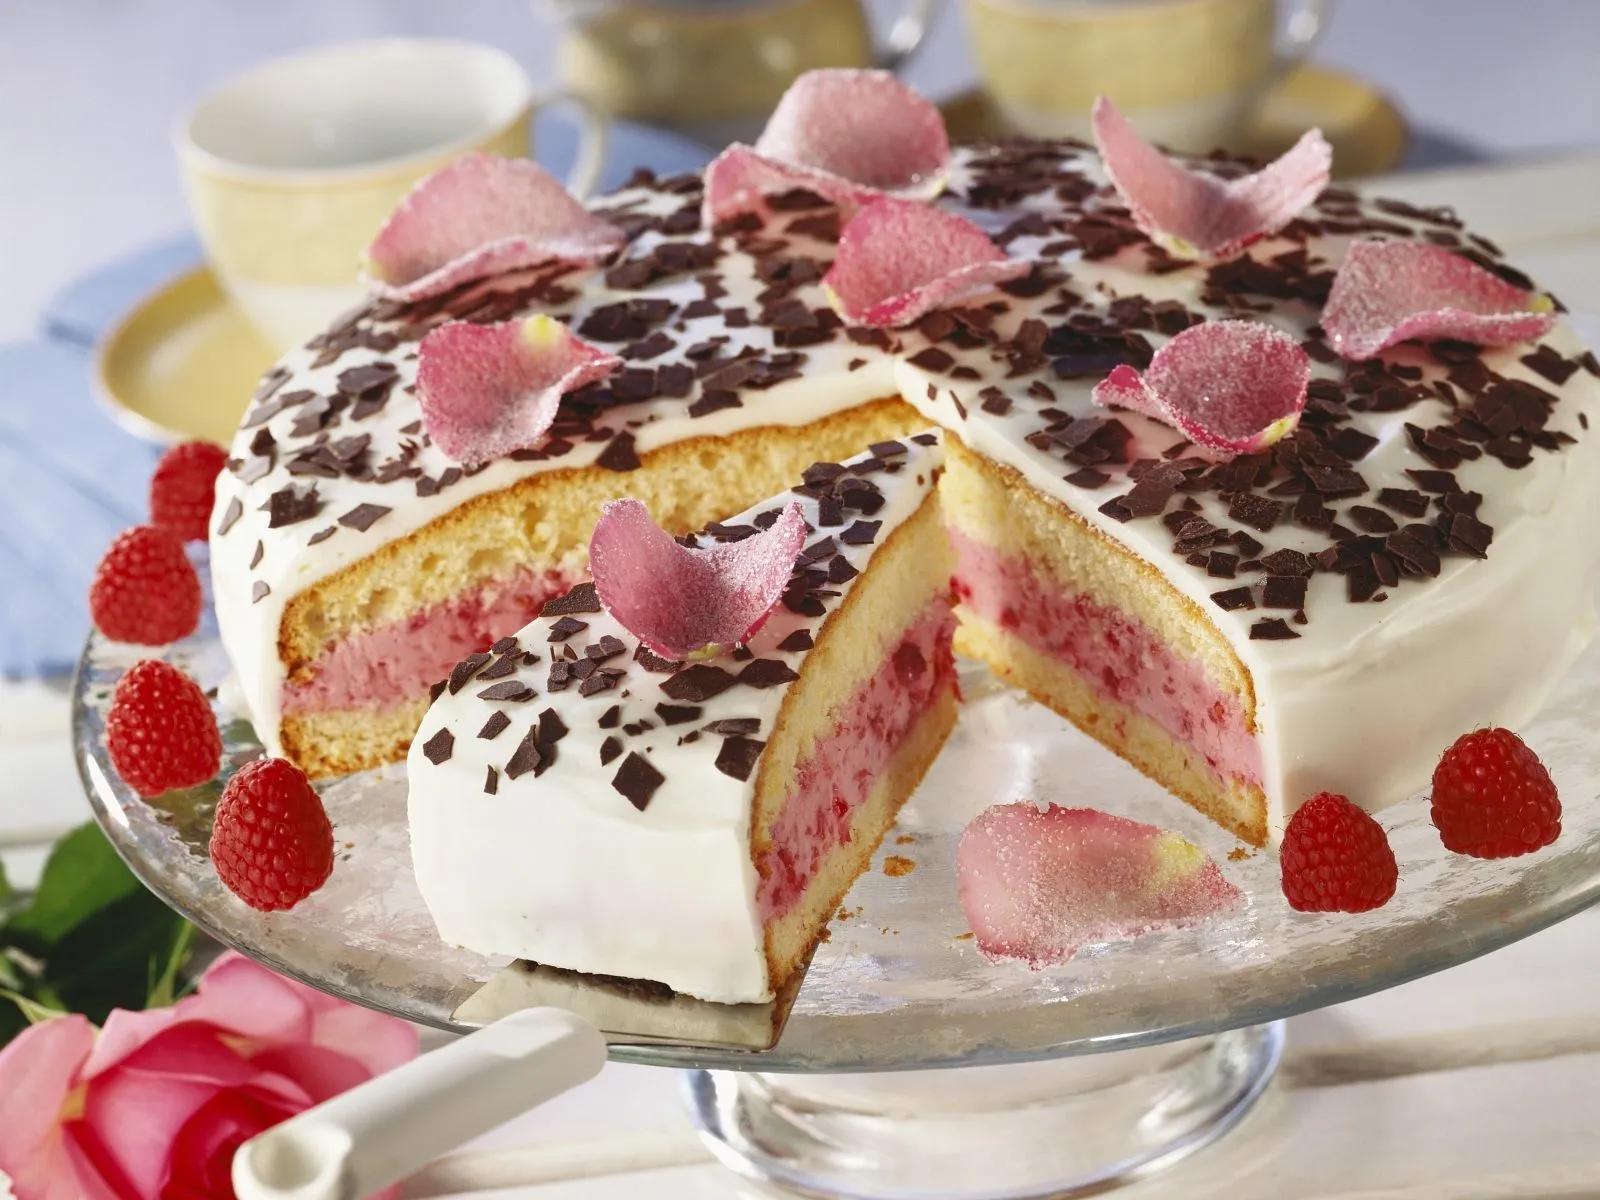 Himbeer-Joghurt-Torte mit Rosenblättern Rezept | EAT SMARTER